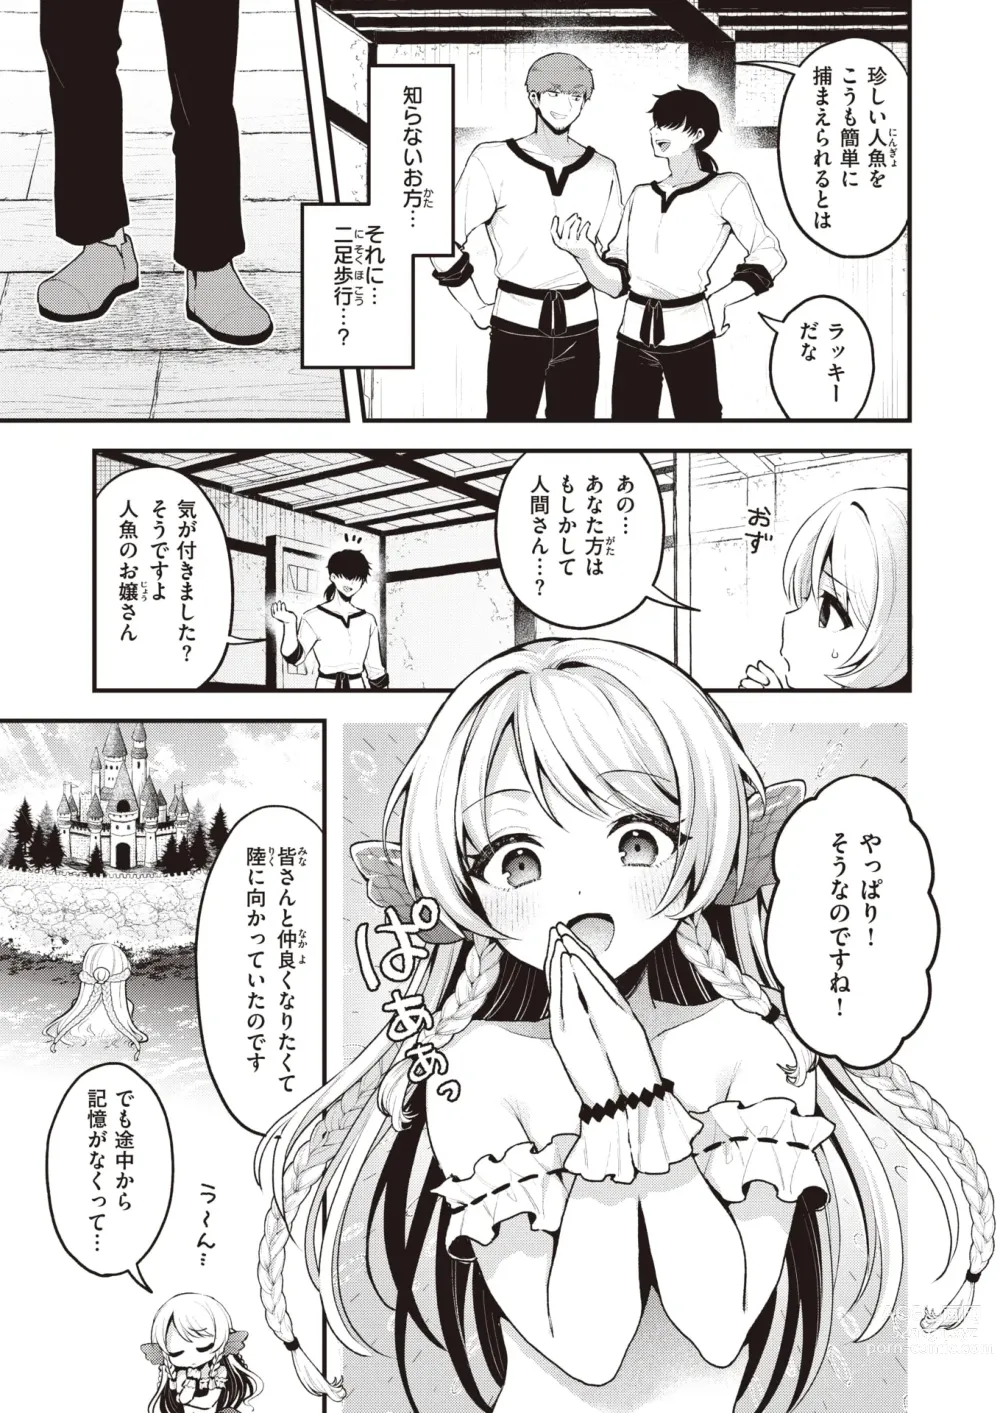 Page 4 of manga Isekai Rakuten Vol. 31